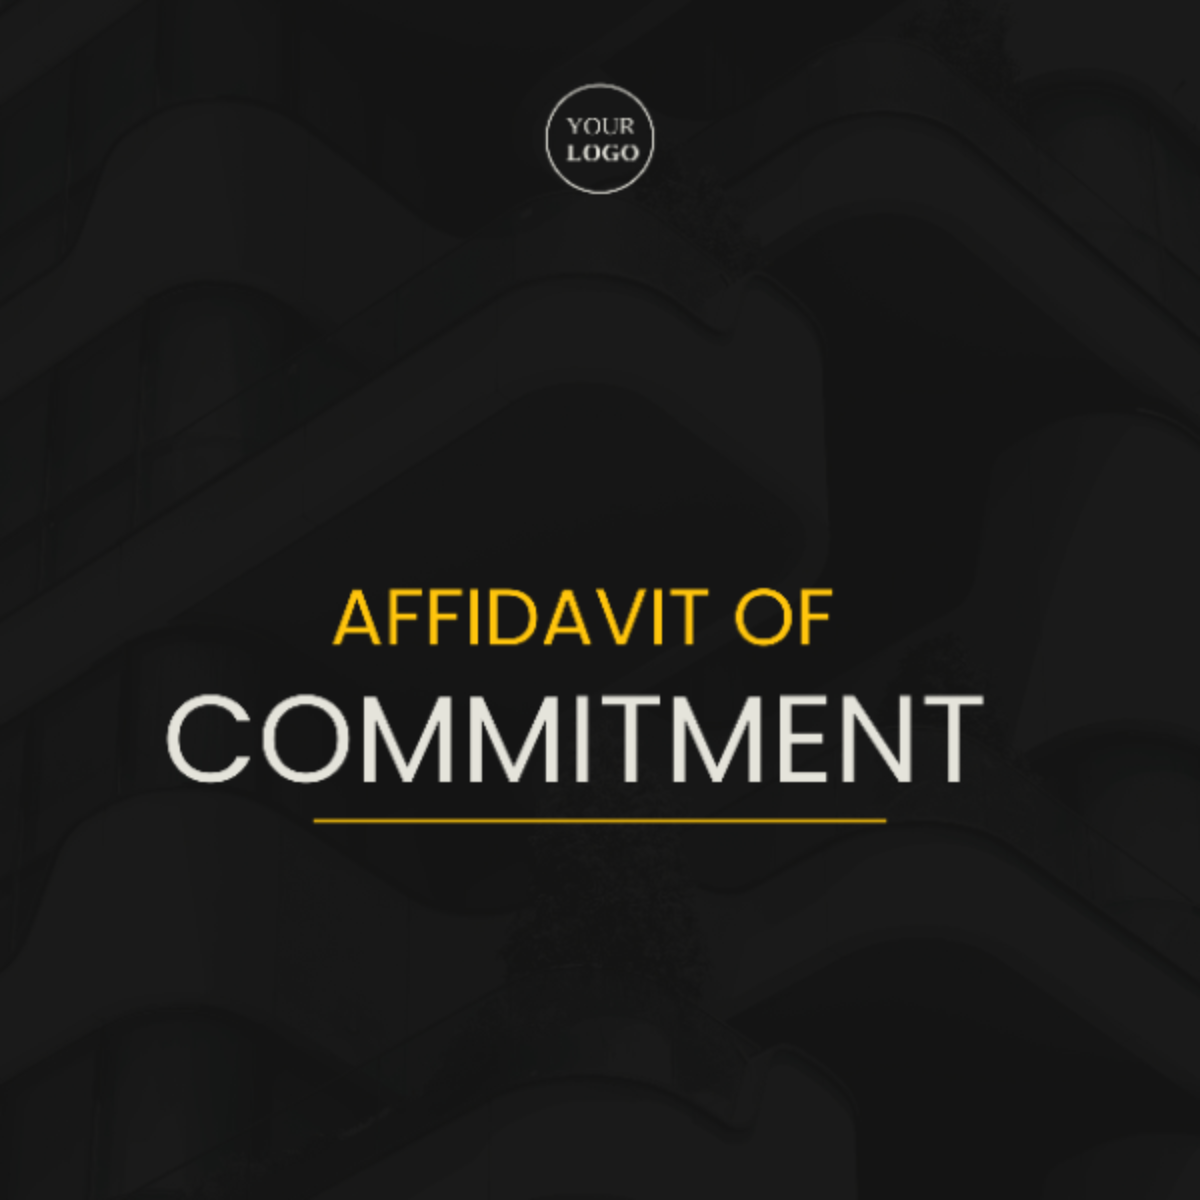 Affidavit of Commitment Template